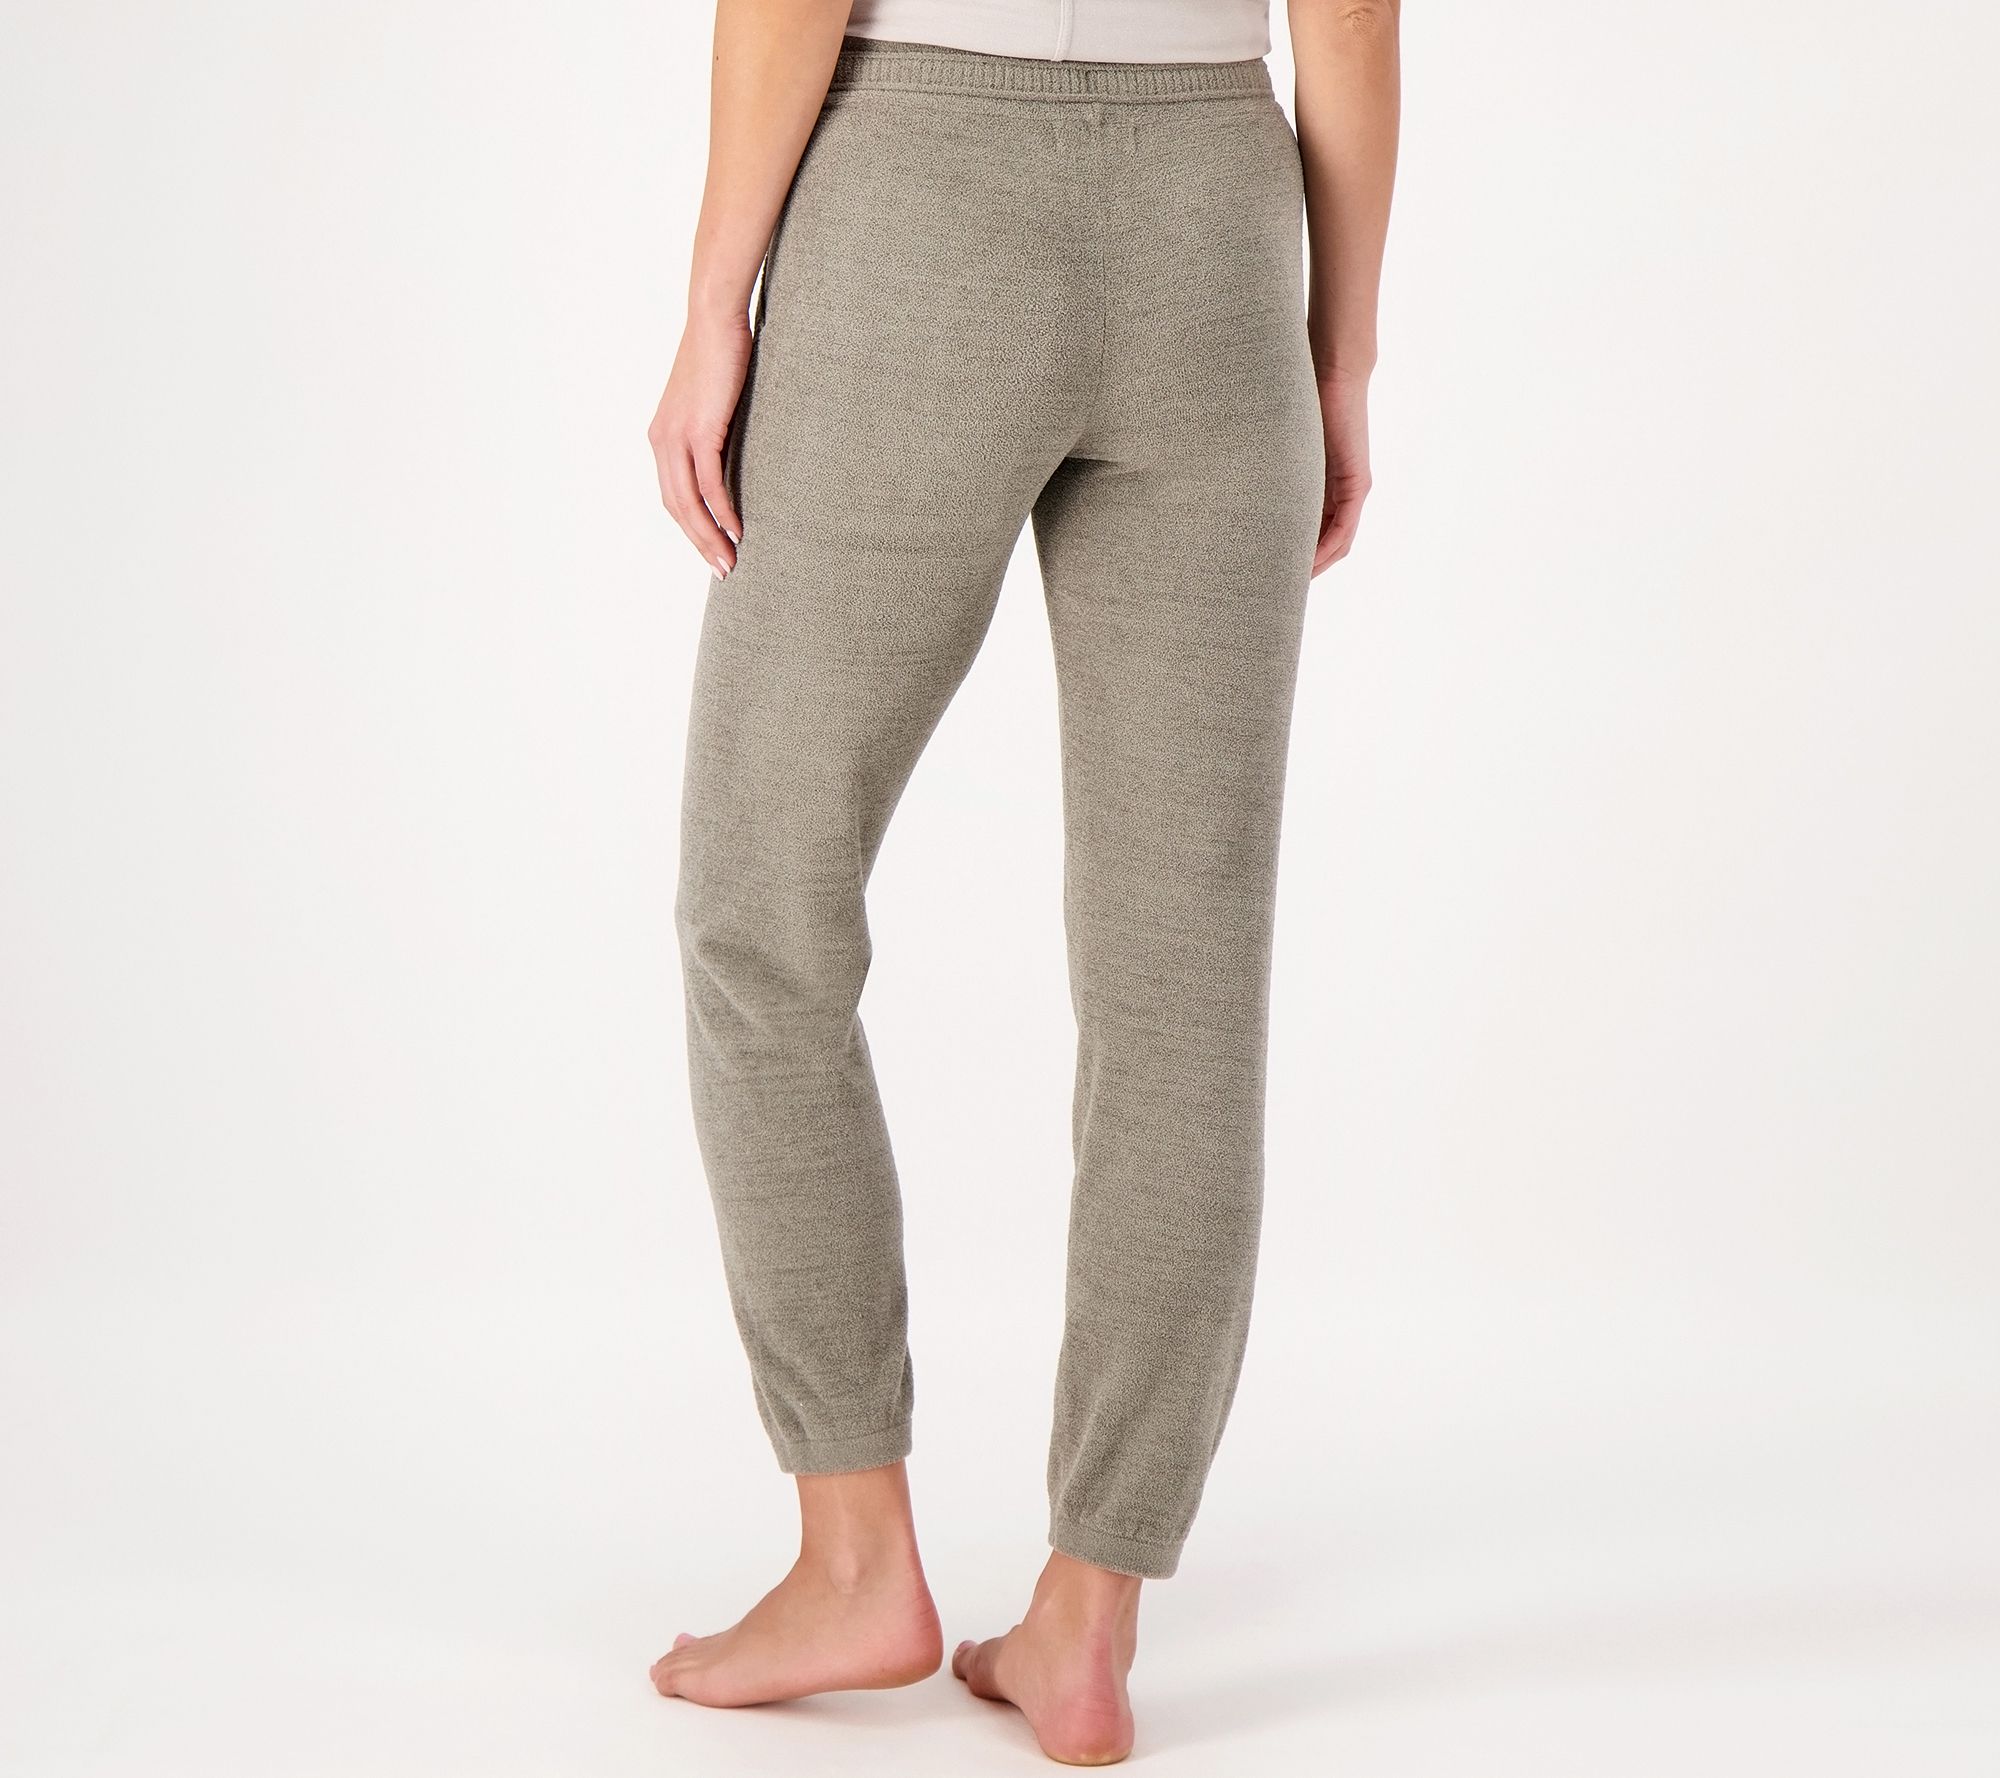 Grey Sweatpants – The General Philosophy